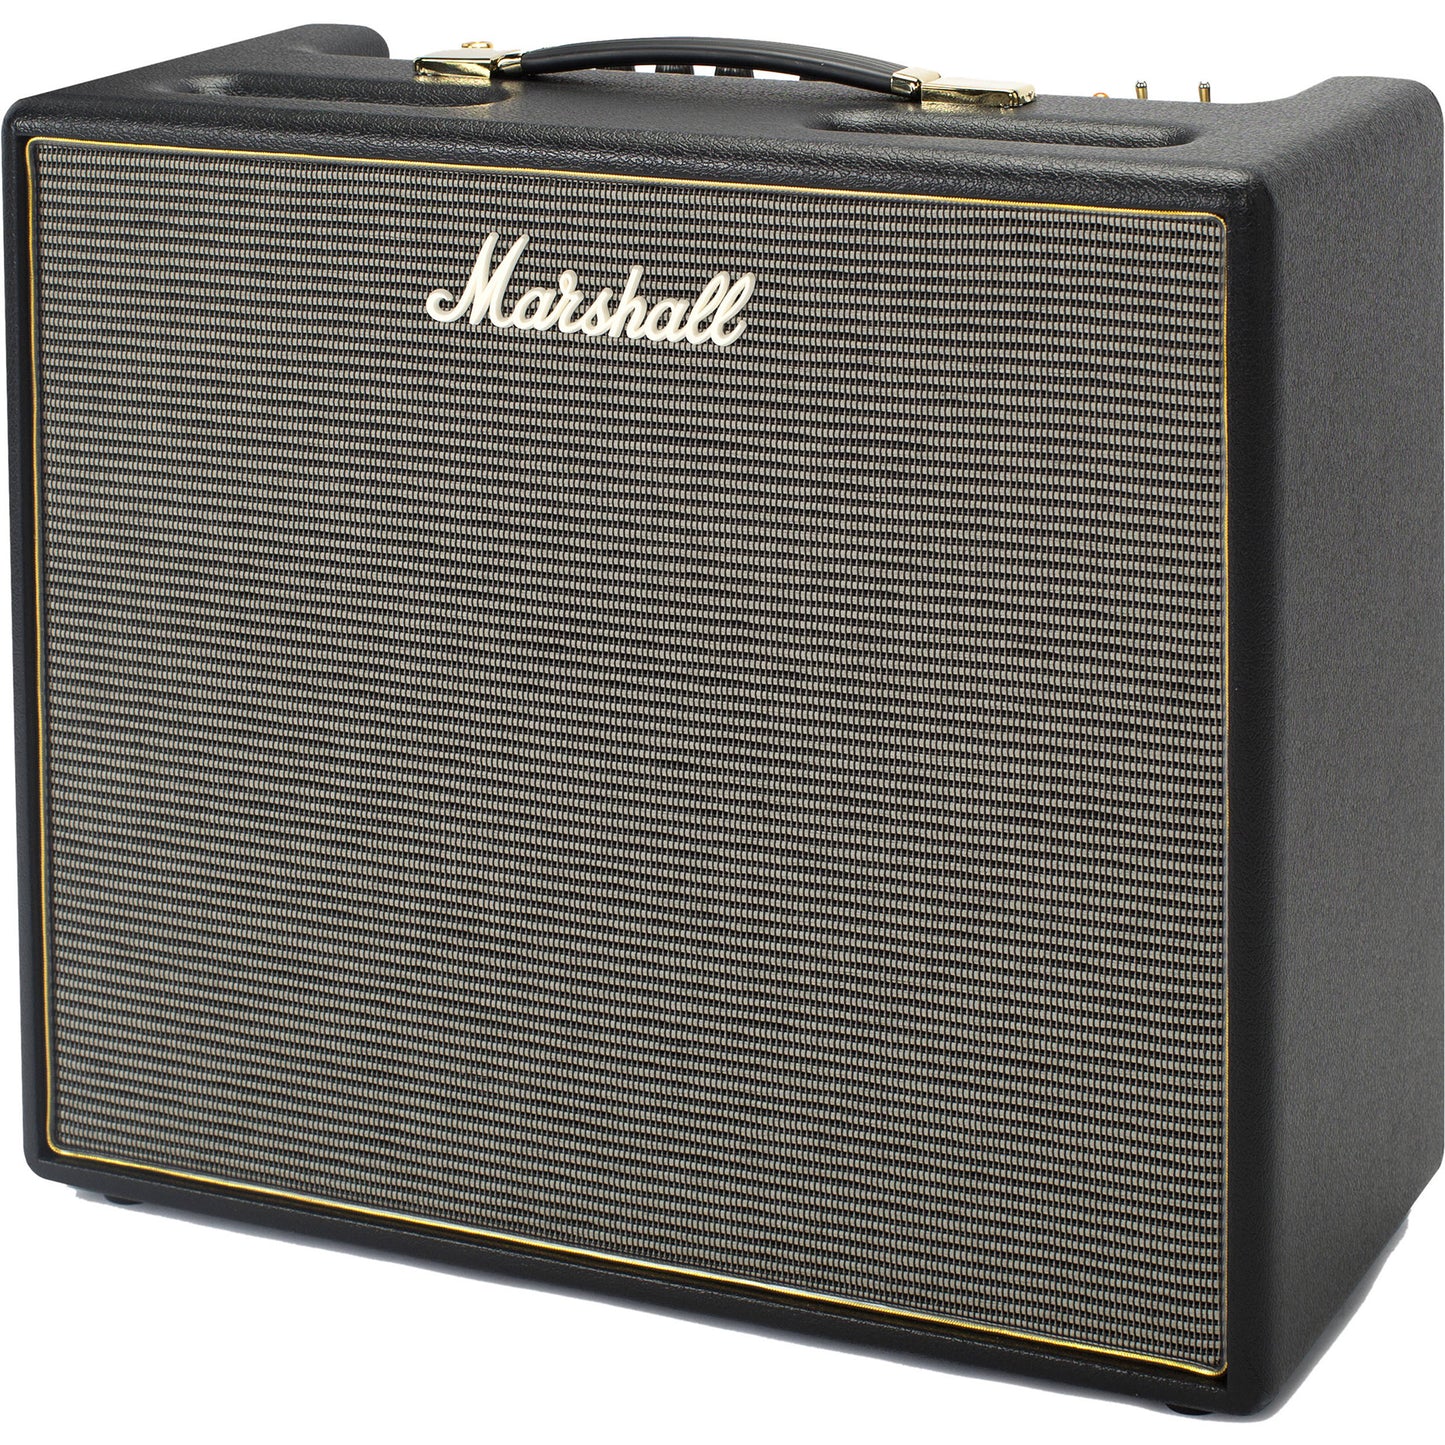 Marshall Origin ORI50C 50-Watt 1x12" Guitar Combo Amplifier